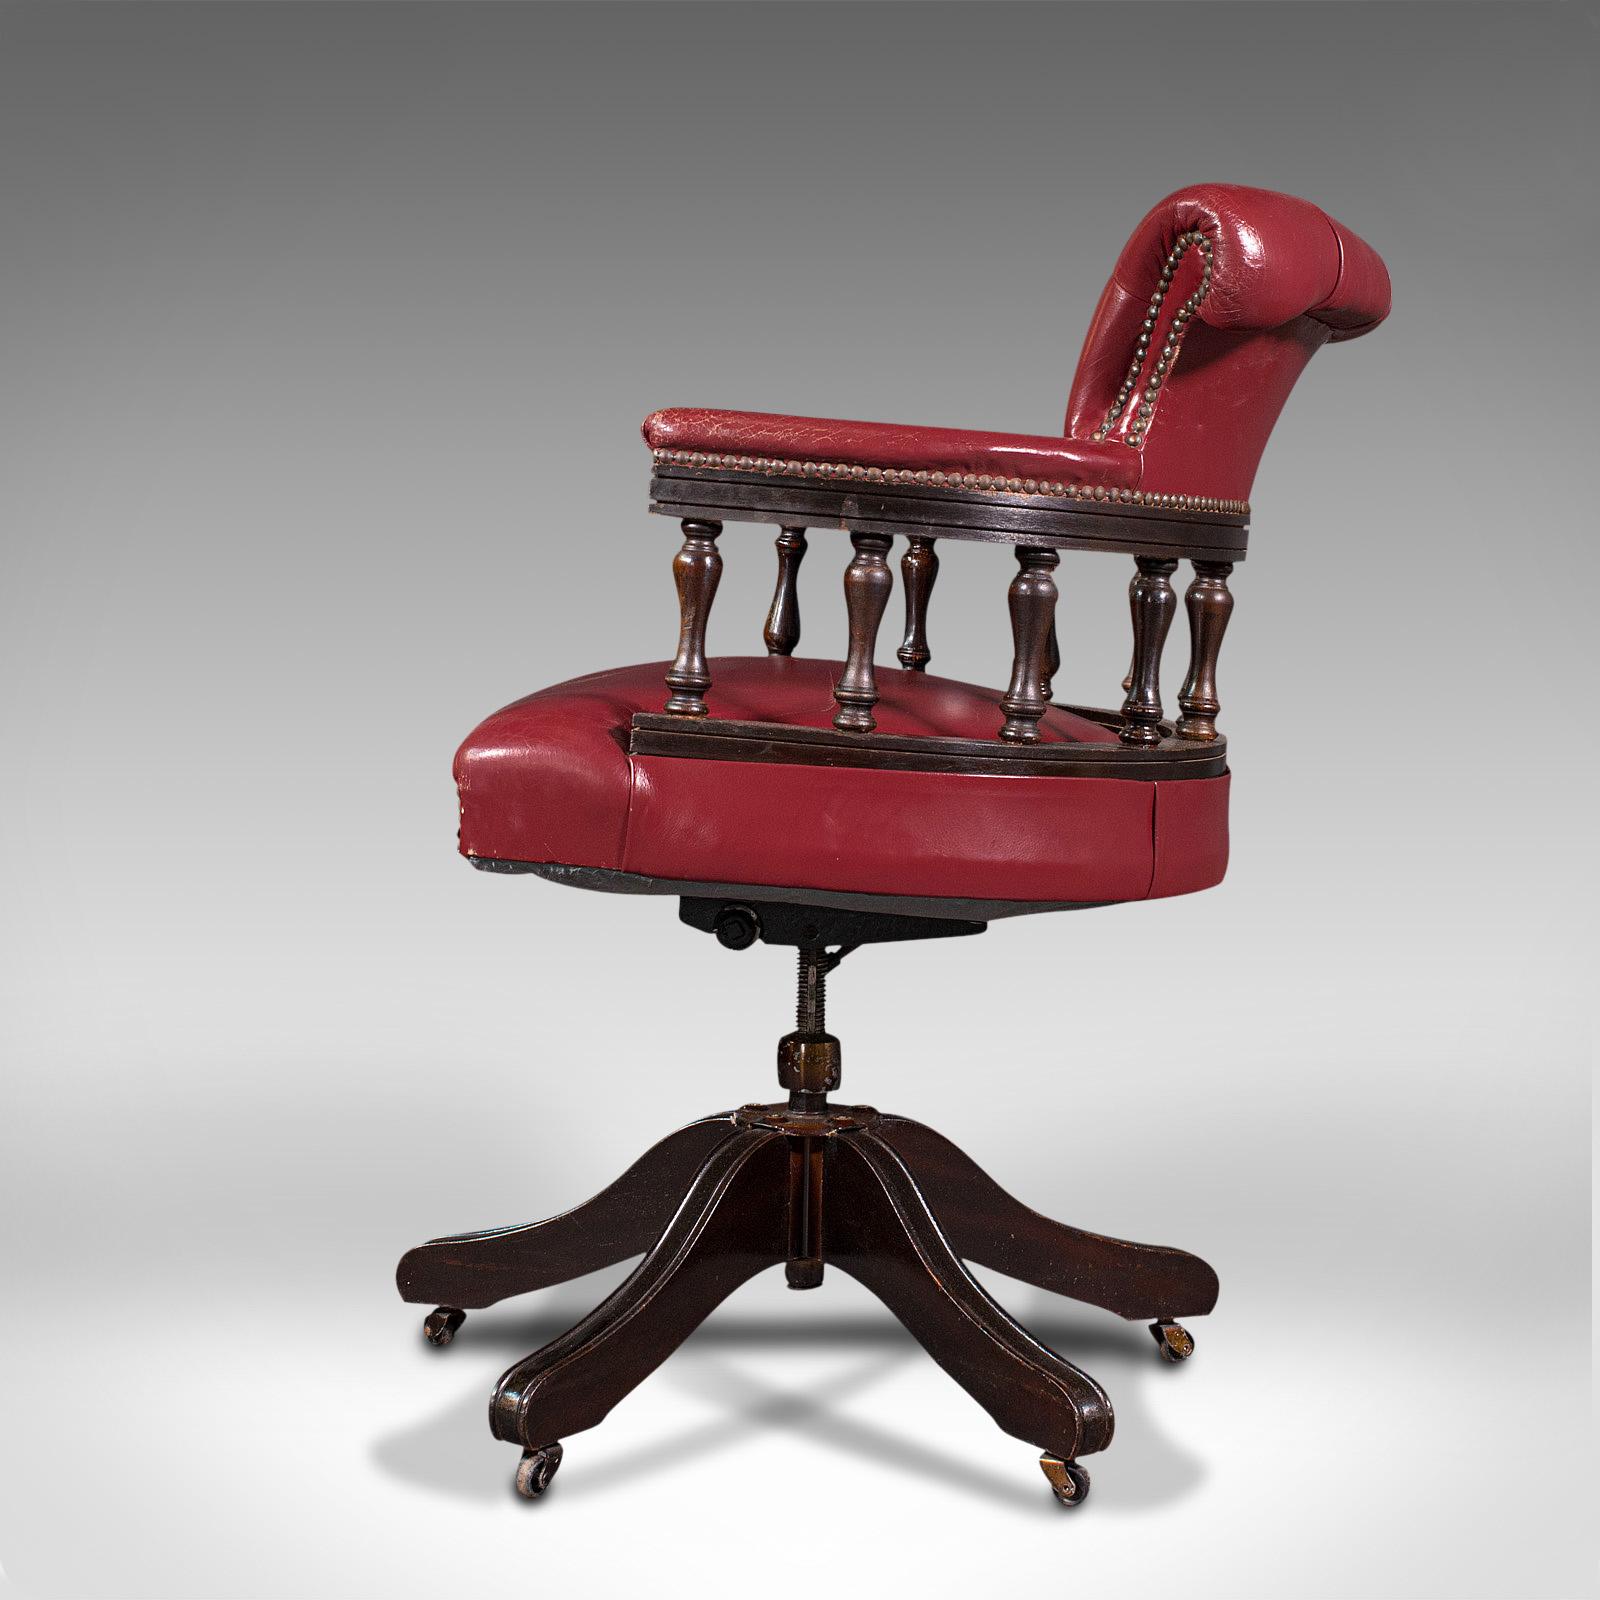 20th Century Vintage Captain's Chair, English, Leather, Desk, Victorian Revival, Circa 1960